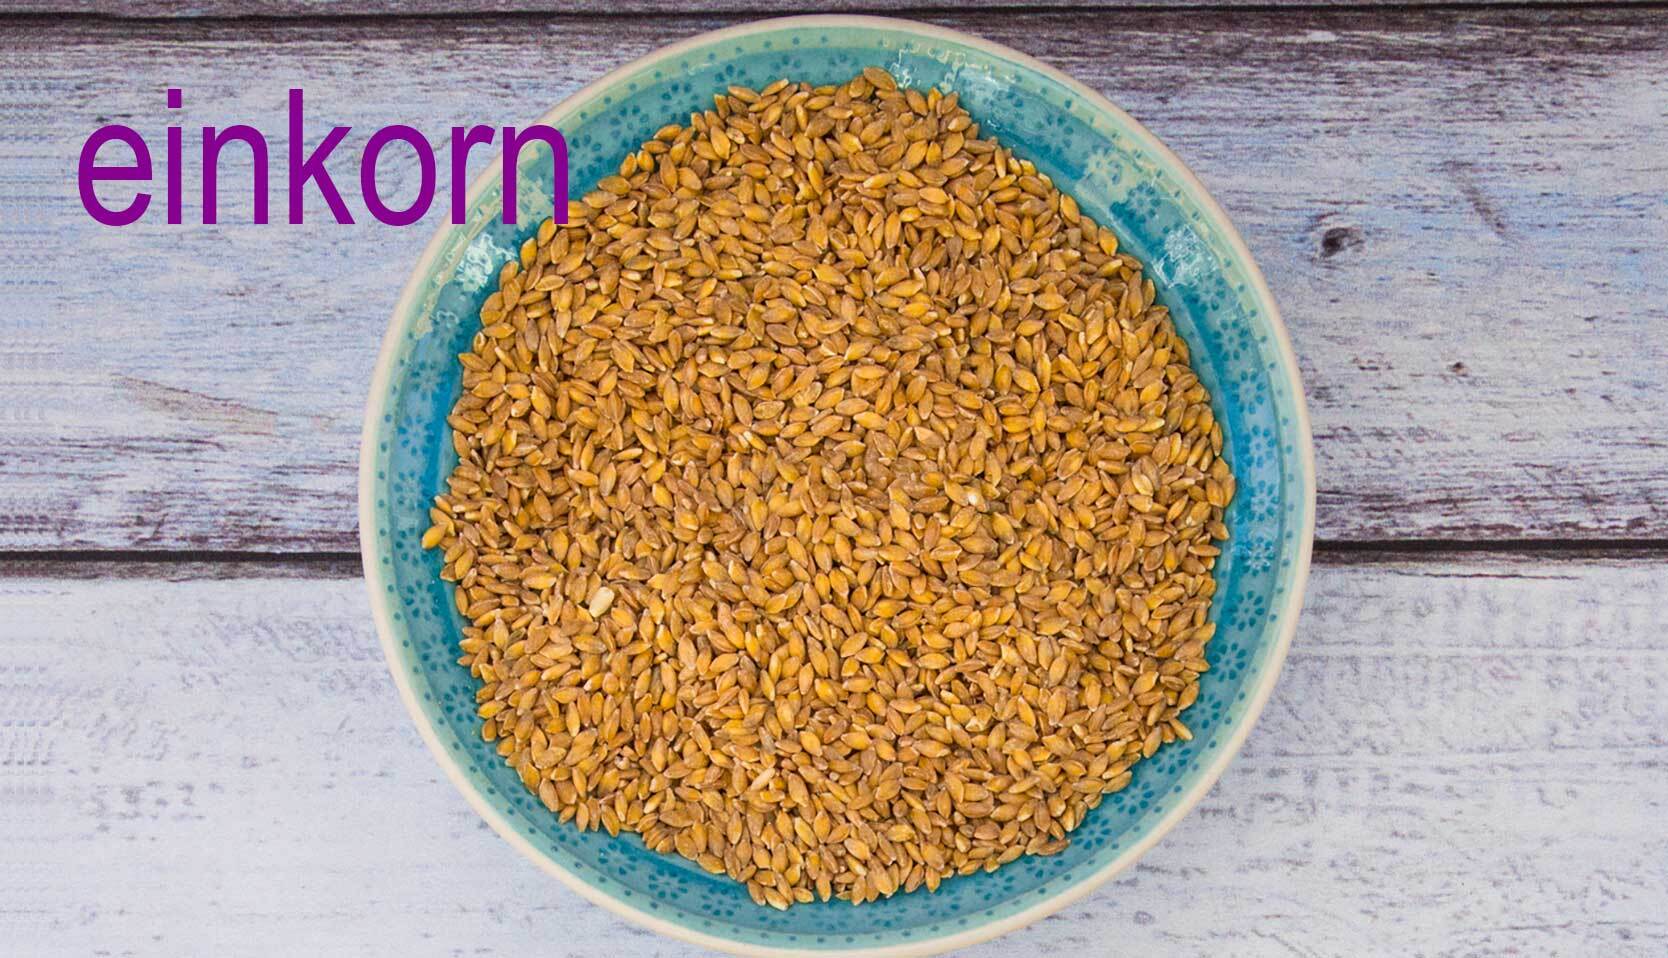 bowl of einkorn wheat grains